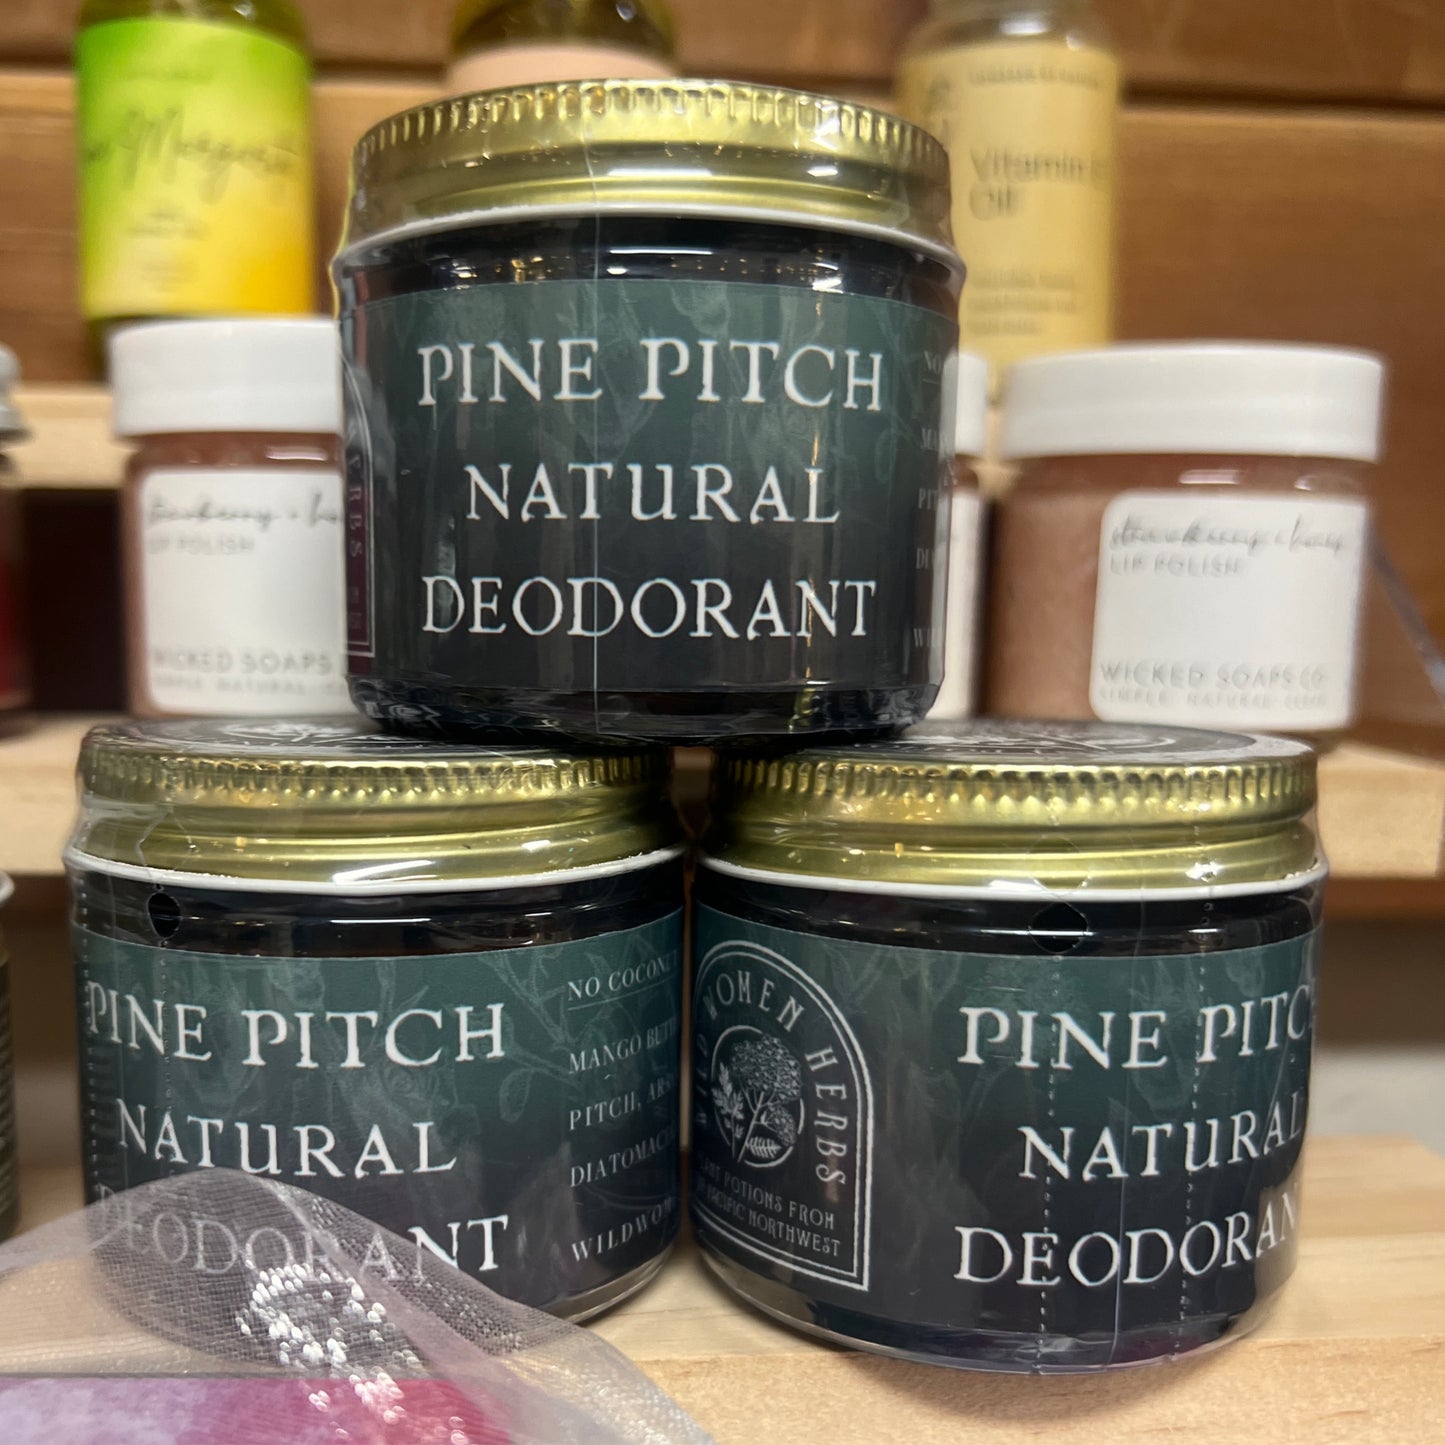 Pine Pitch Natural Deodorant